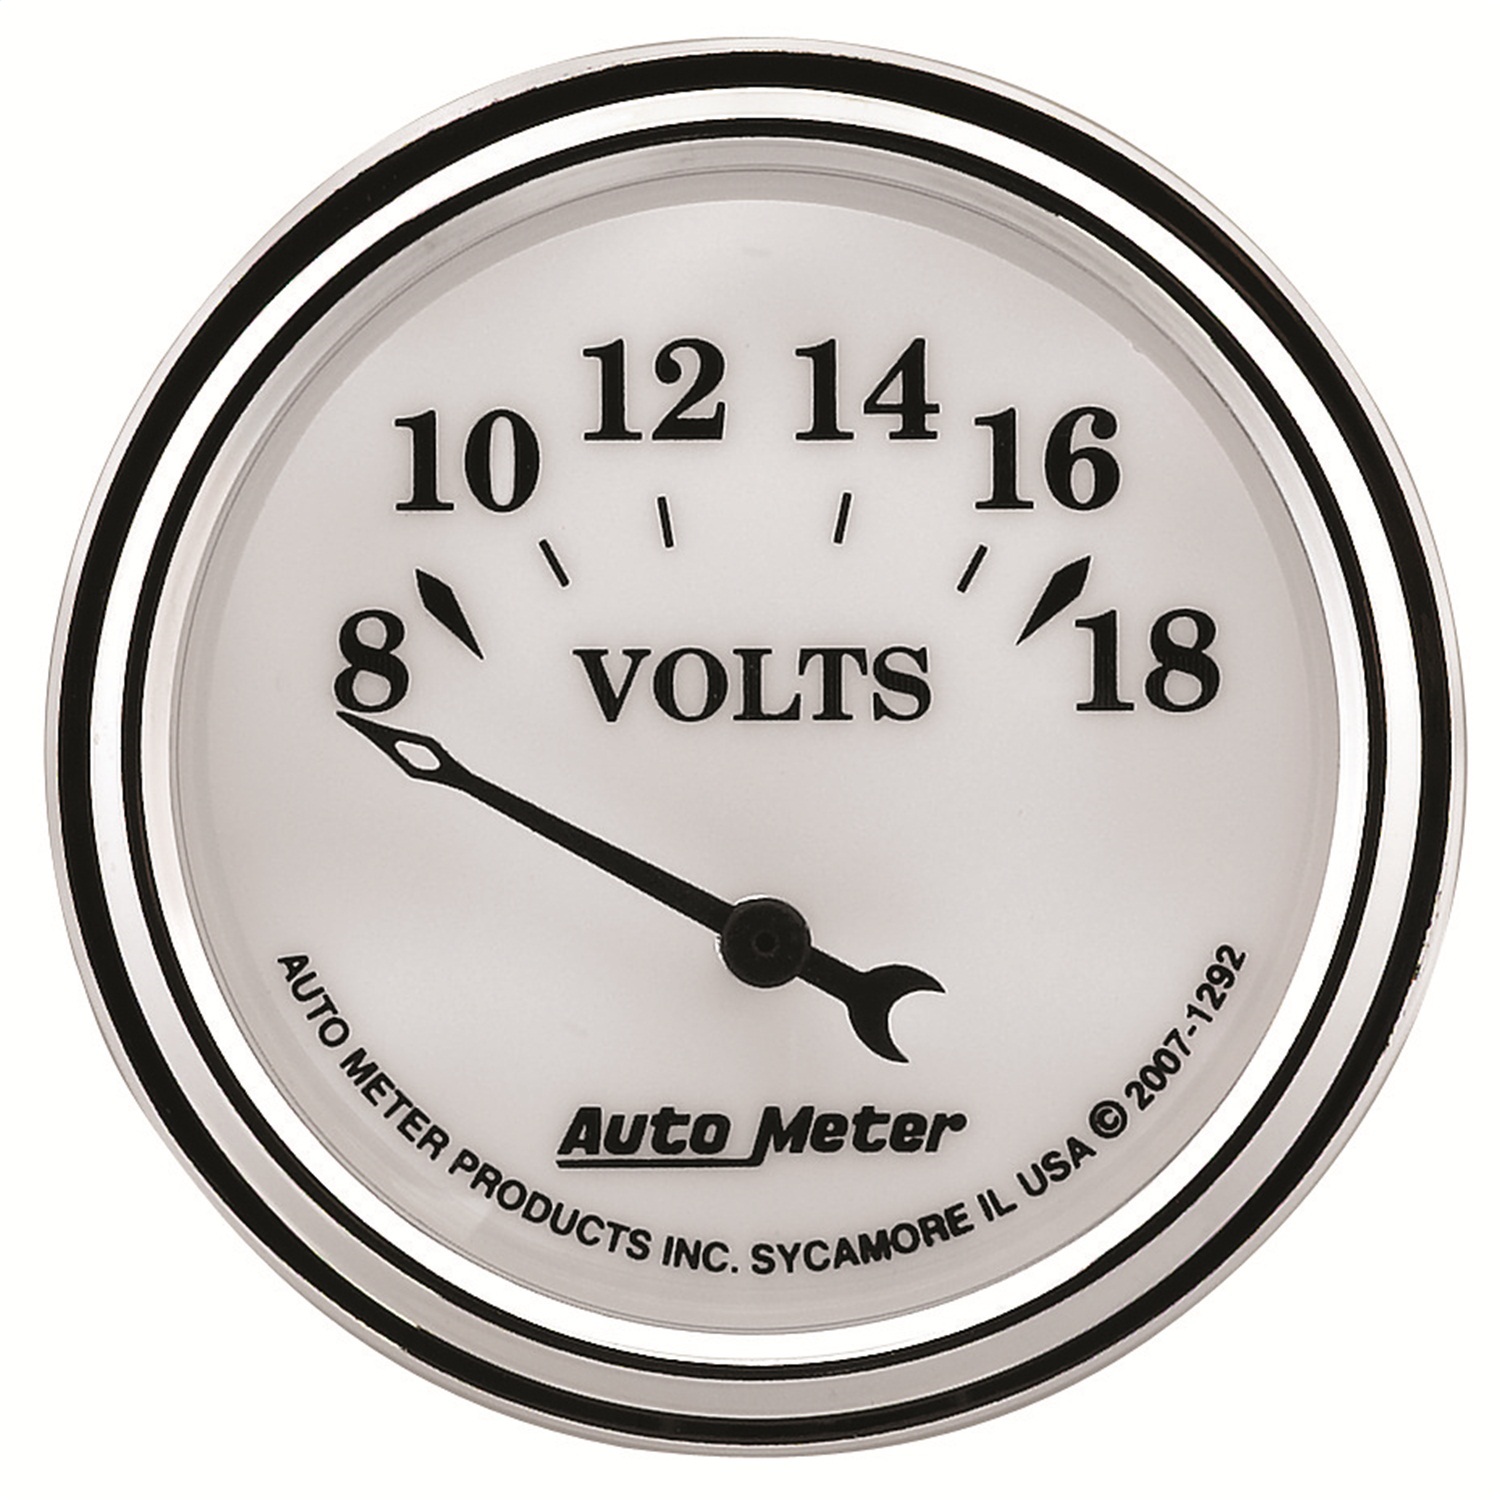 Auto Meter Auto Meter 1292 Old Tyme White II; Voltmeter Gauge